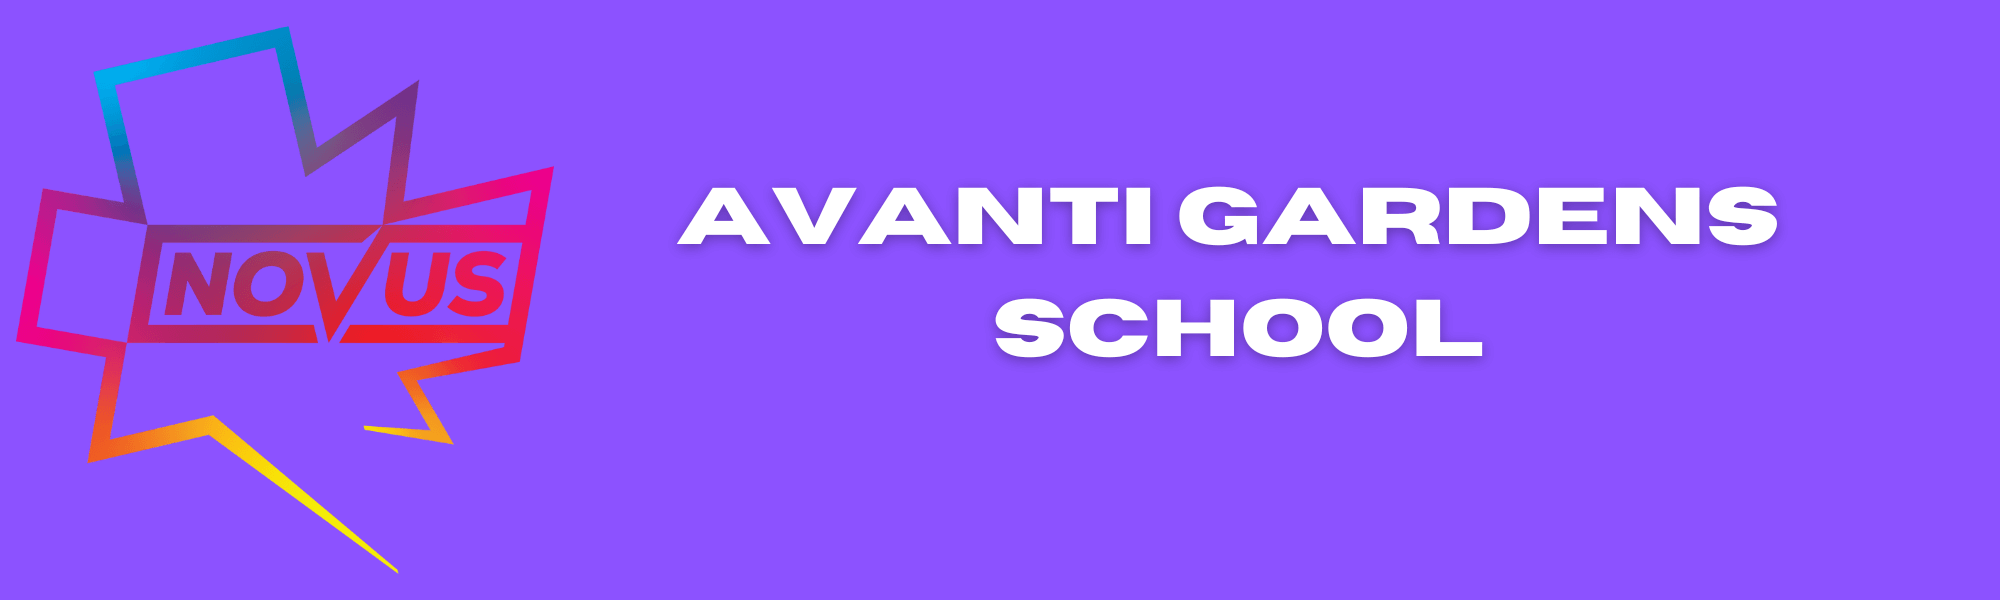 Avanti Gardens School Banner